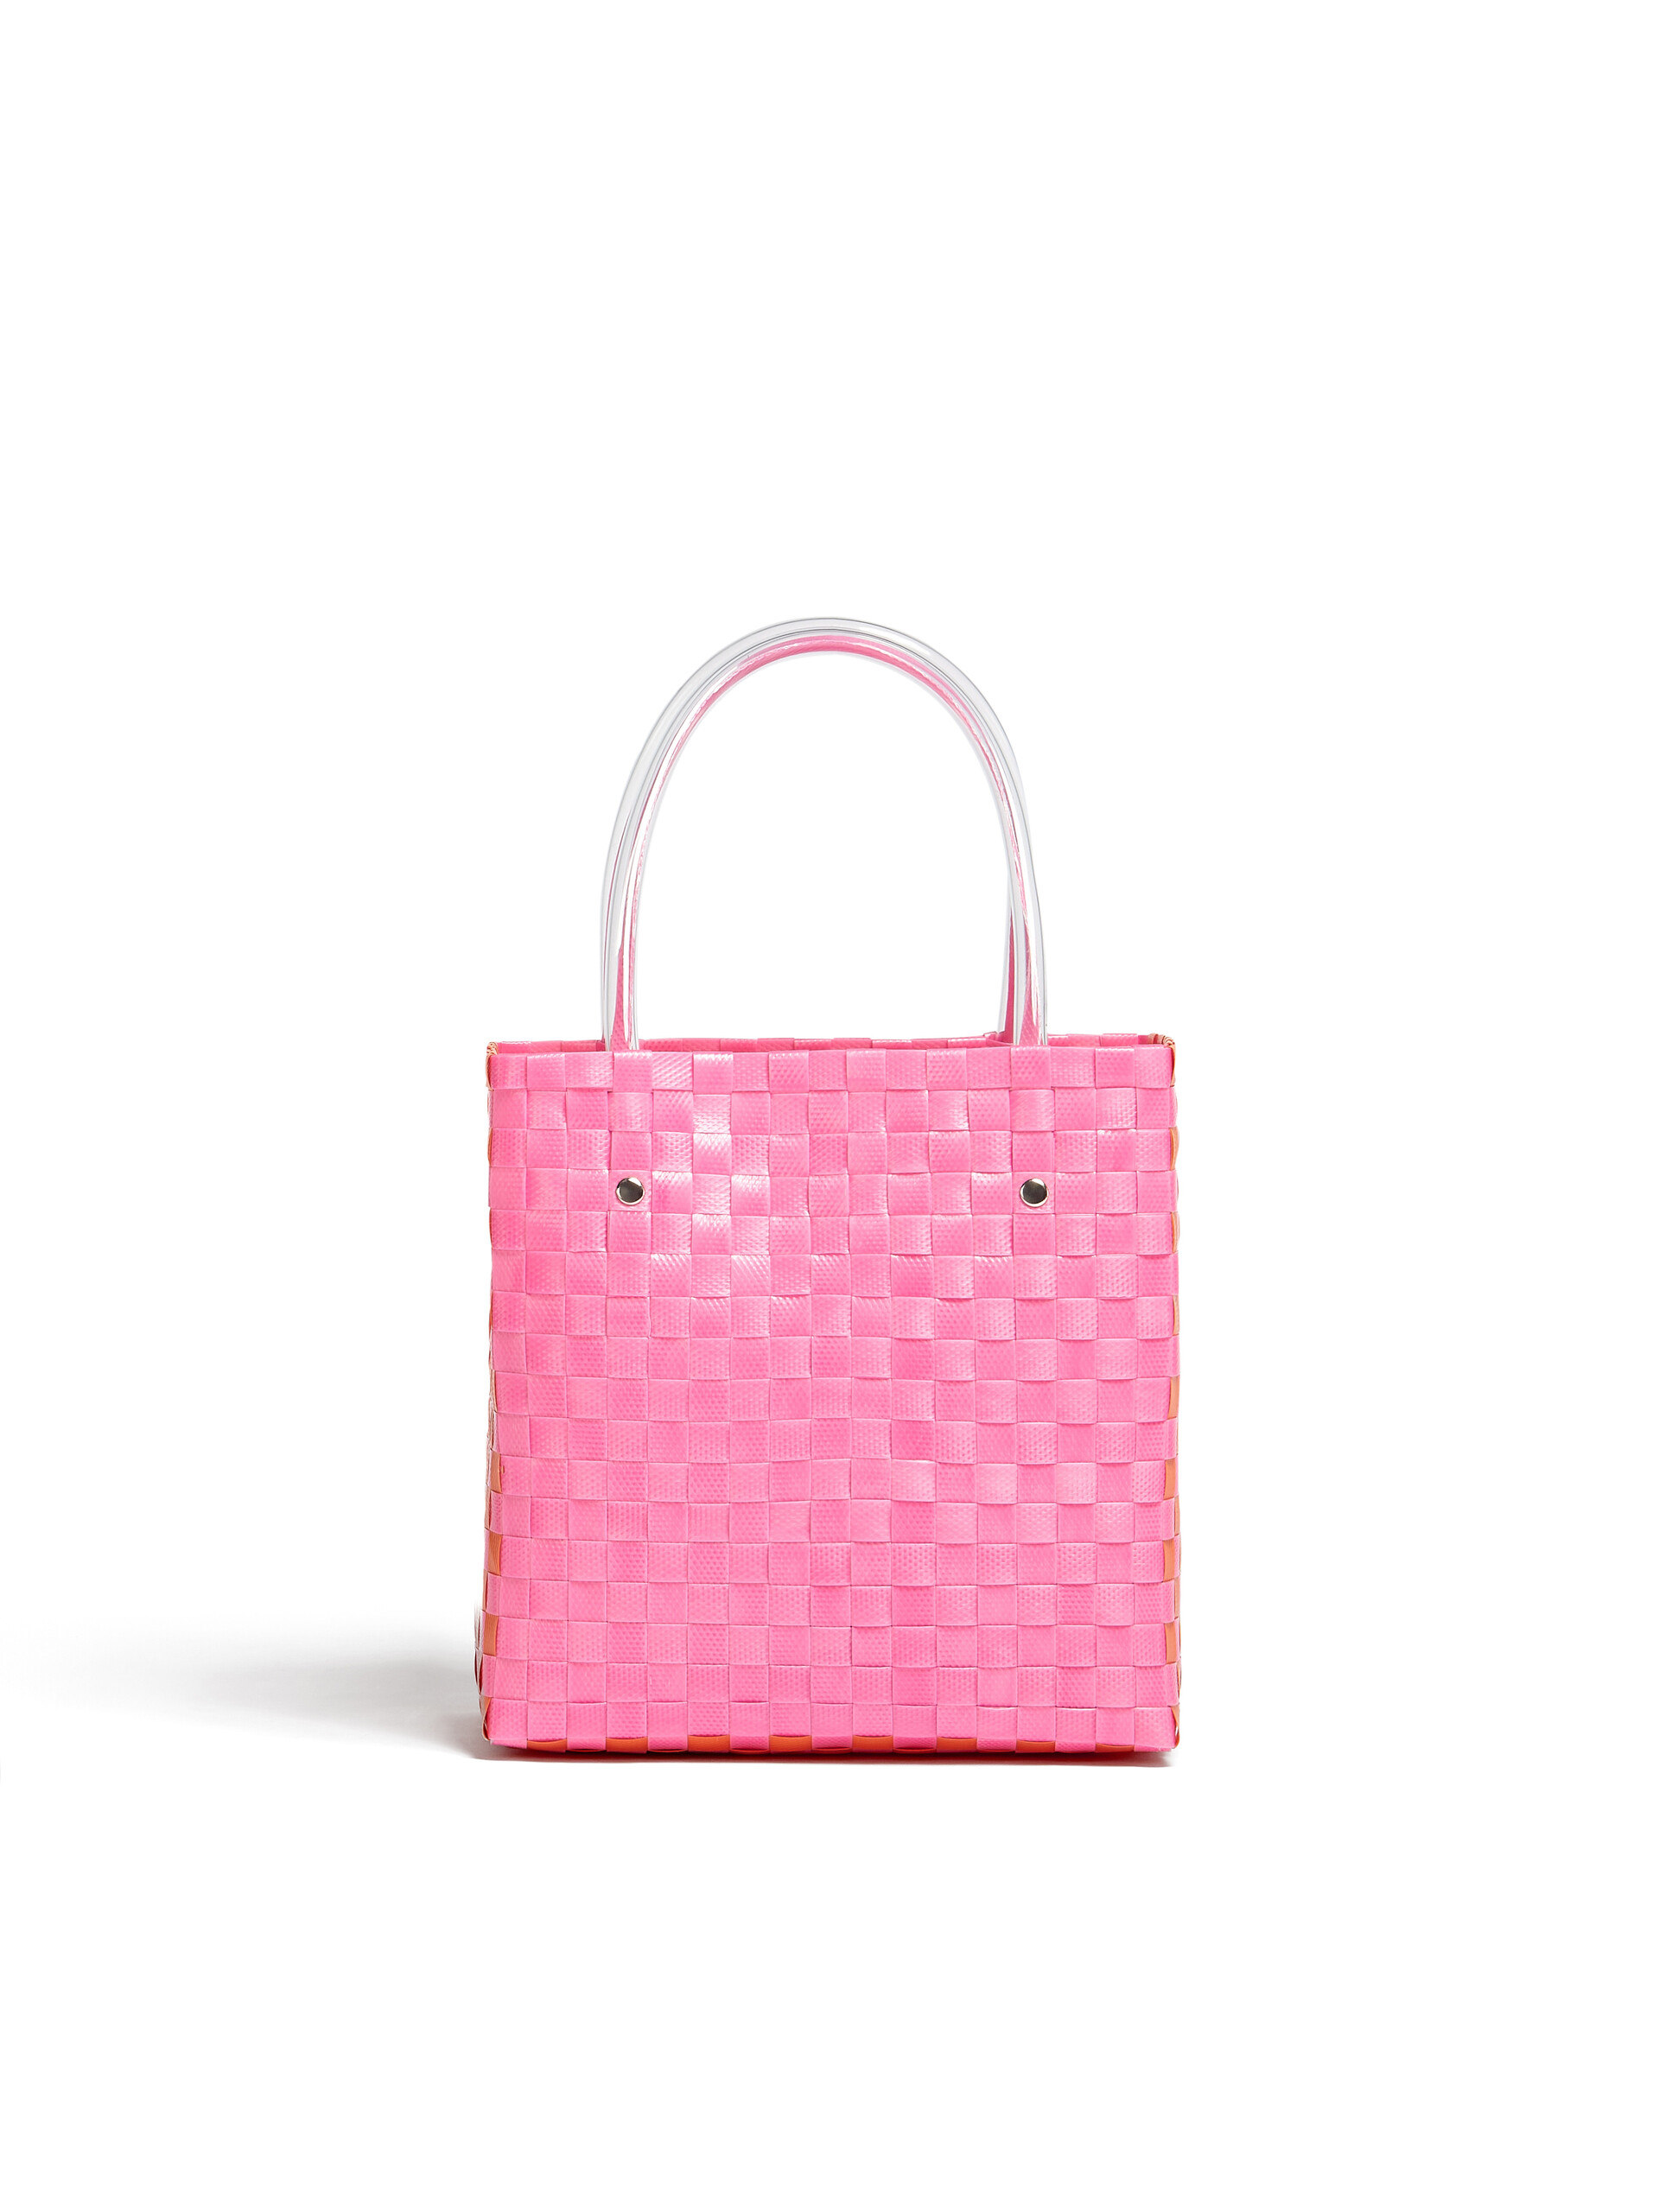 MARNI MARKET mini bag in polypropylene with pink M logo - Bags - Image 3